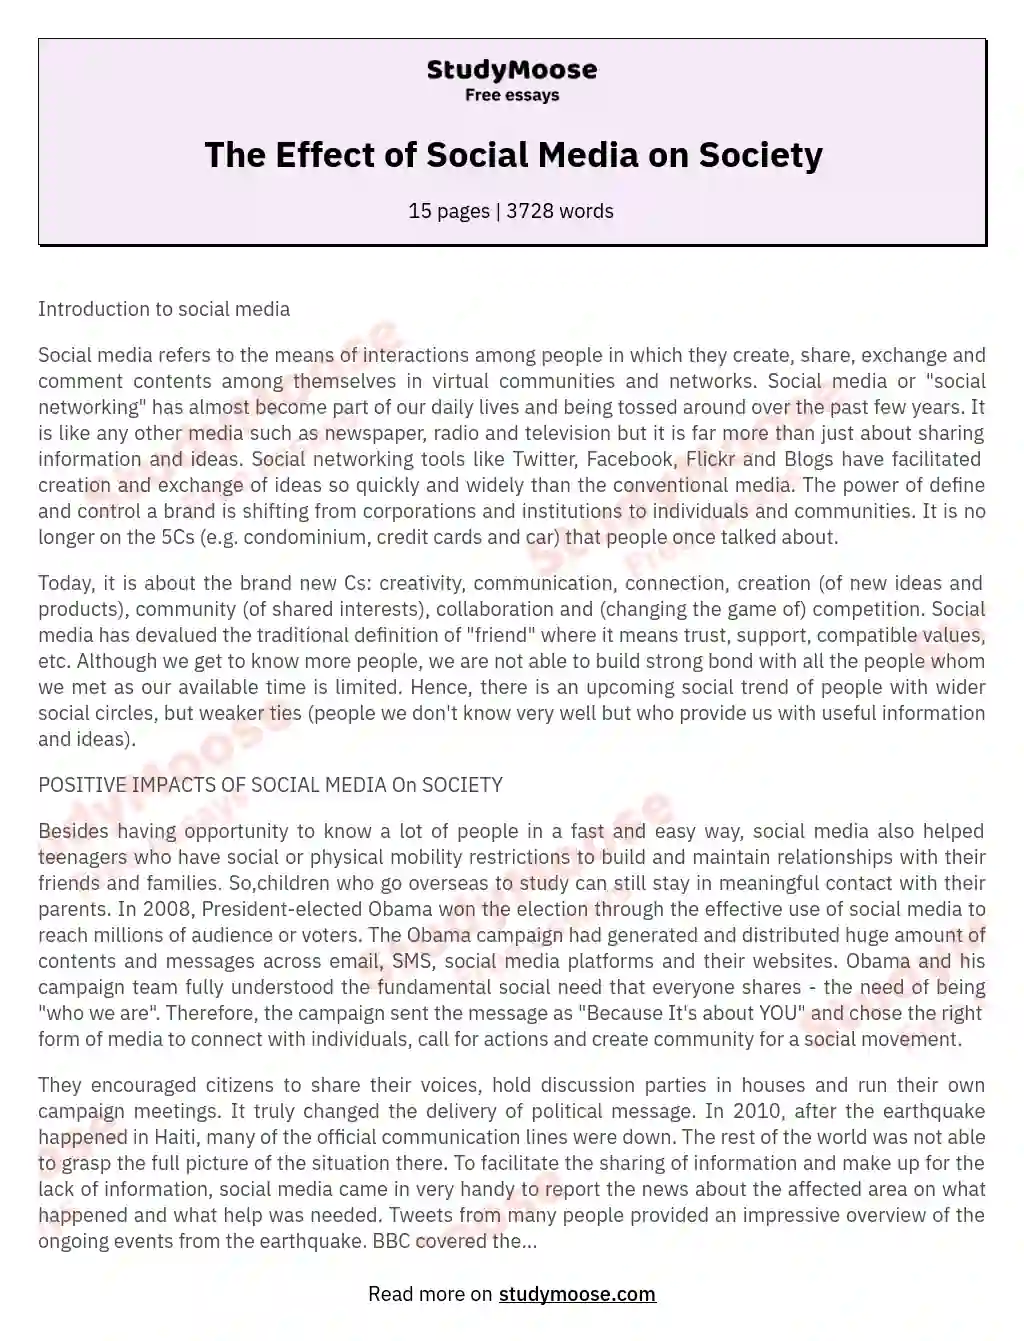 The Effect of Social Media on Society essay